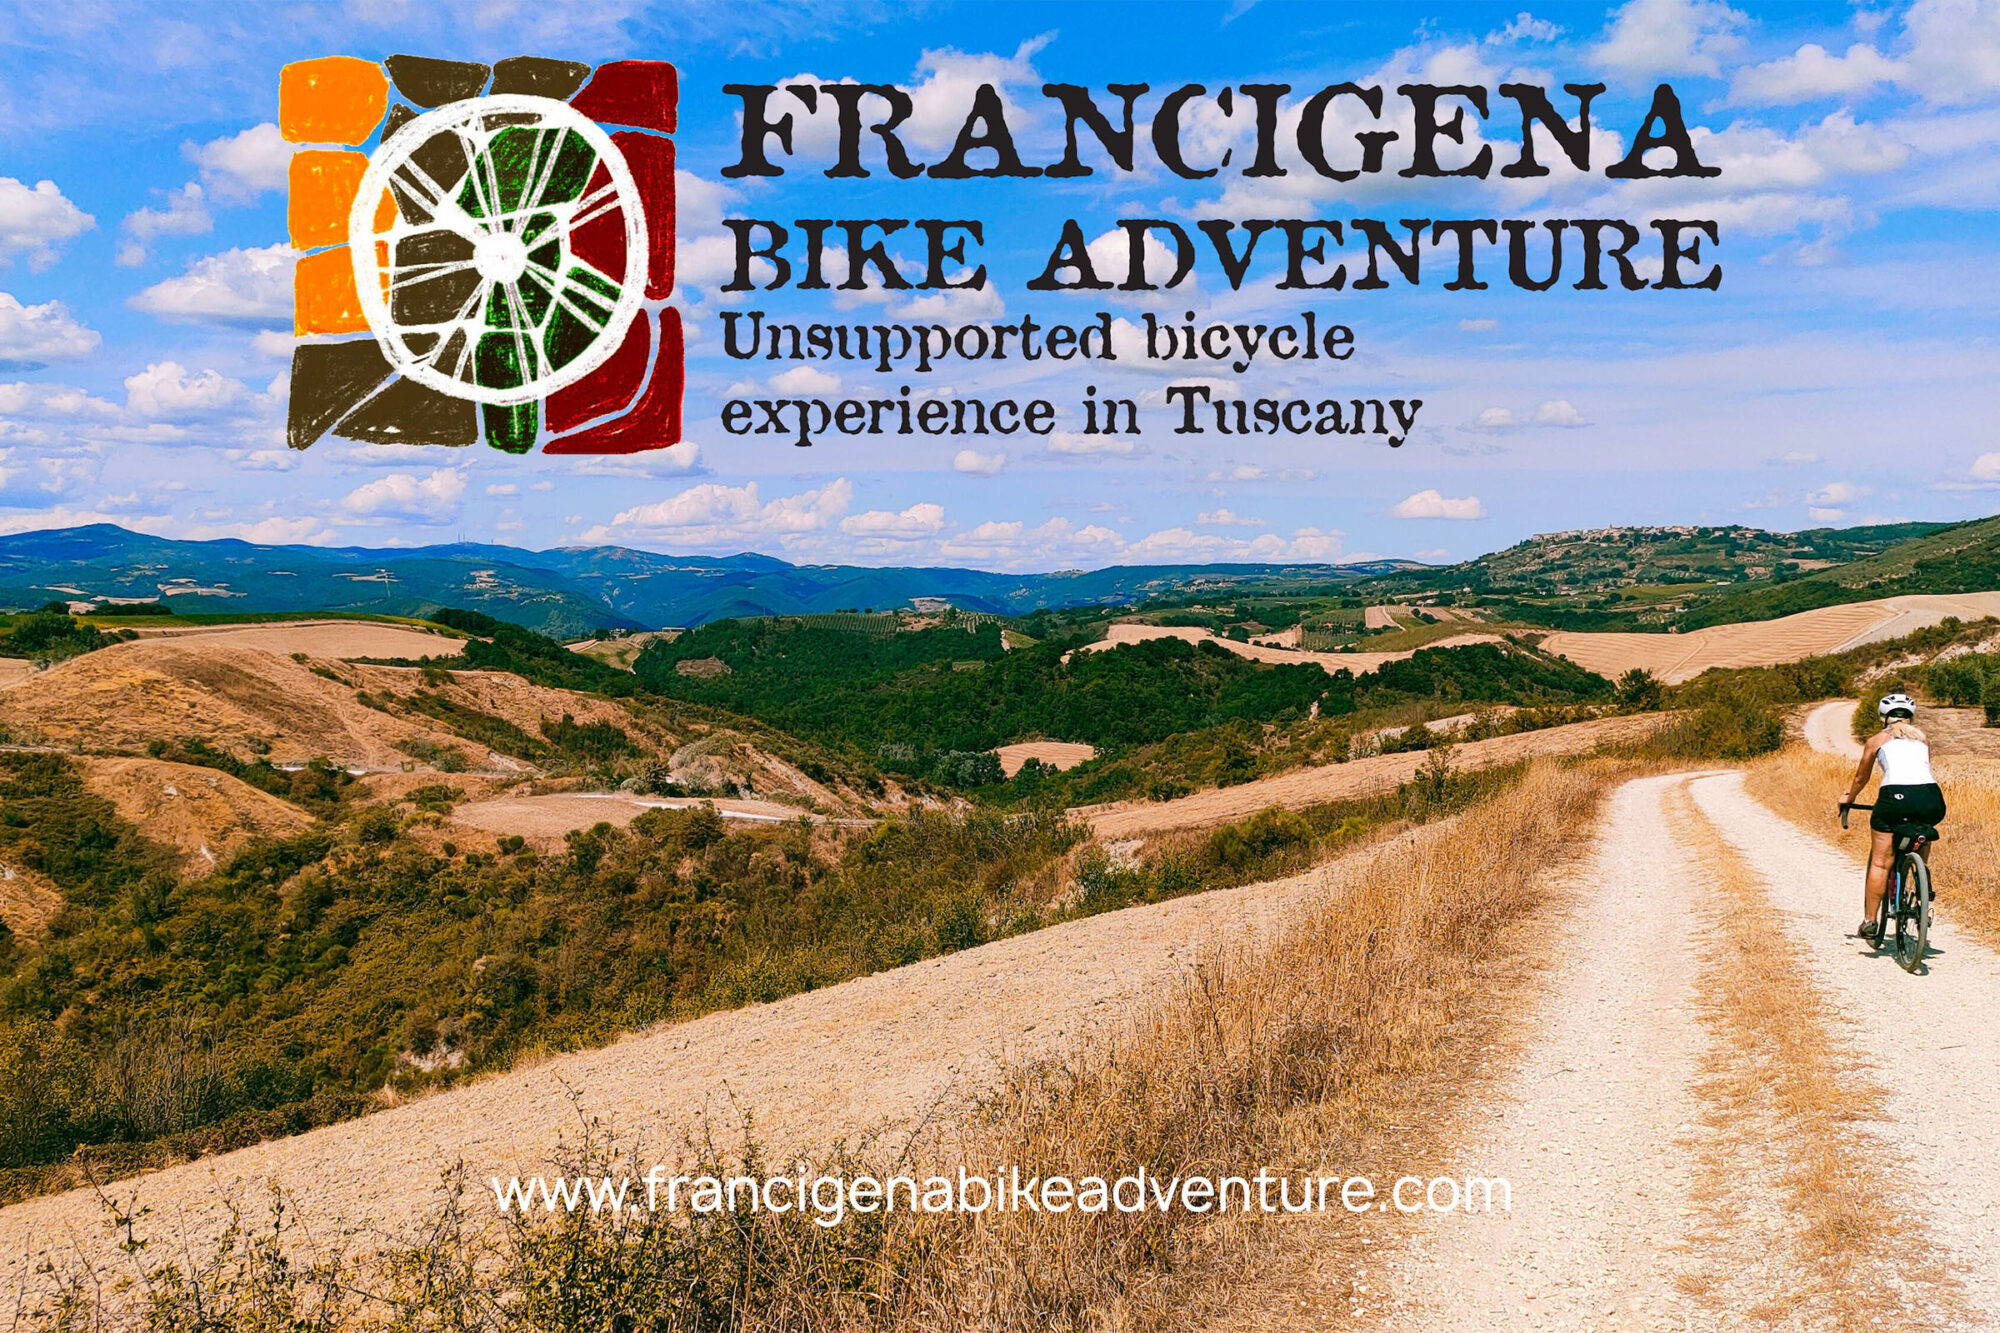 The Francigena Bike Adventure